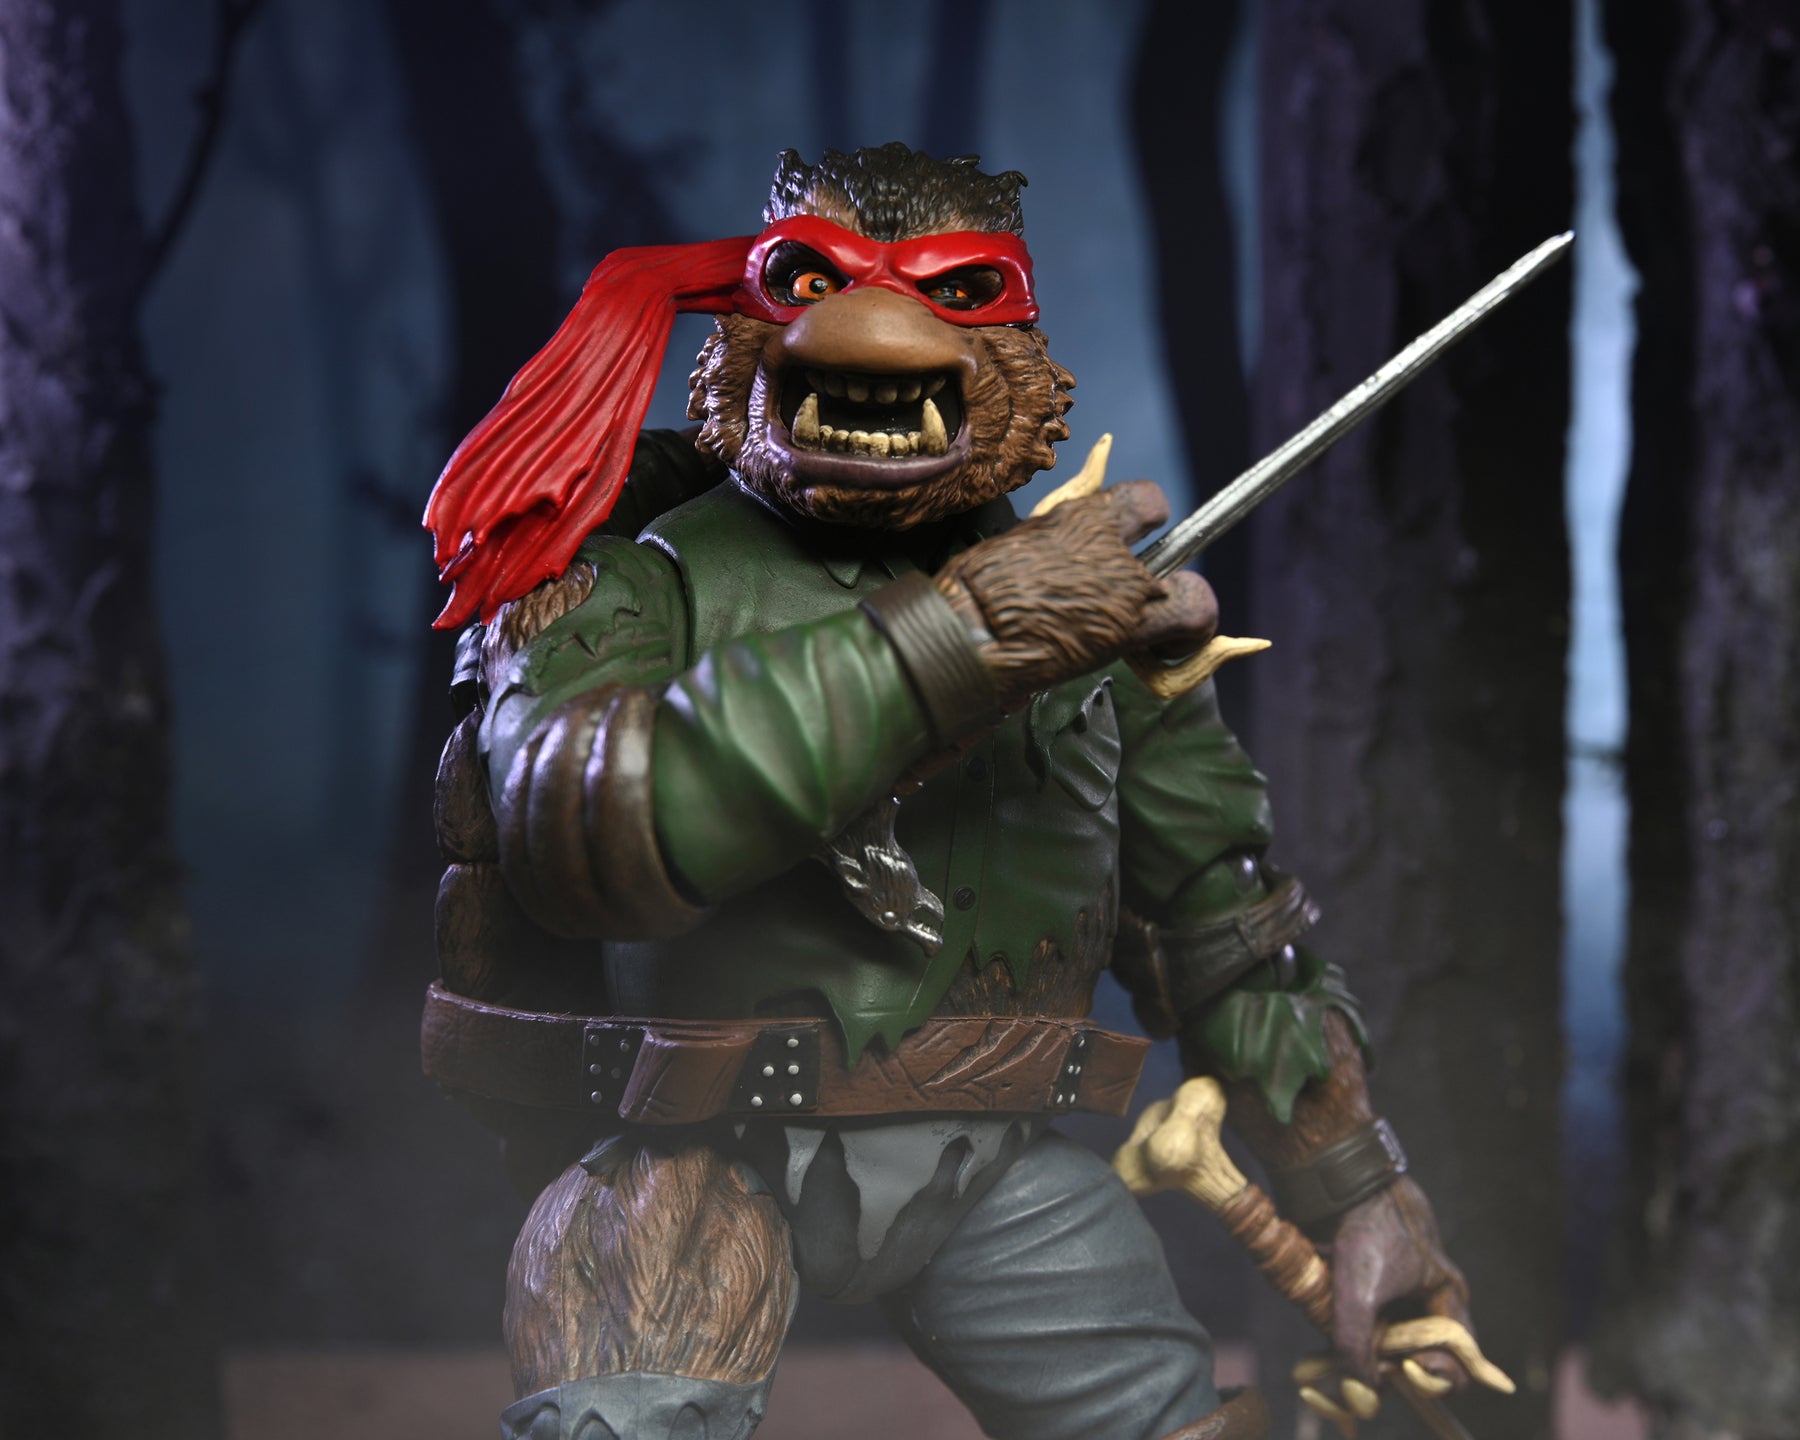 NECA - Universal Monsters x TMNT - Ultimate Raphael as Wolfman 7" Action Figure